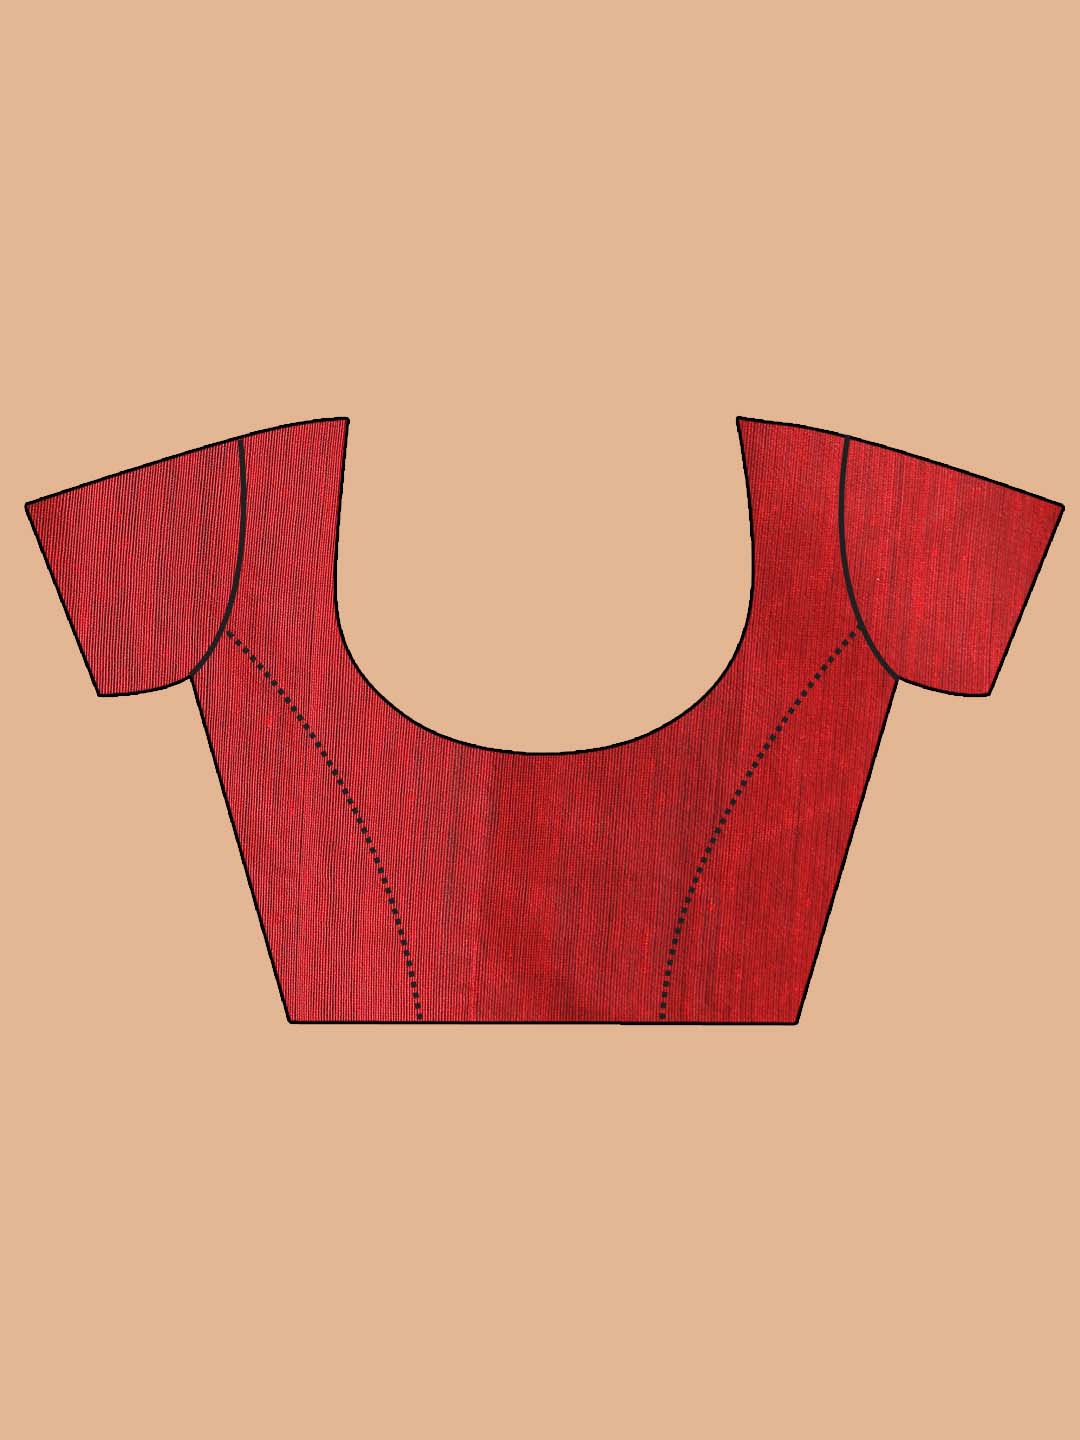 Indethnic Red Bengal Handloom Cotton Blend Work Saree - Blouse Piece View